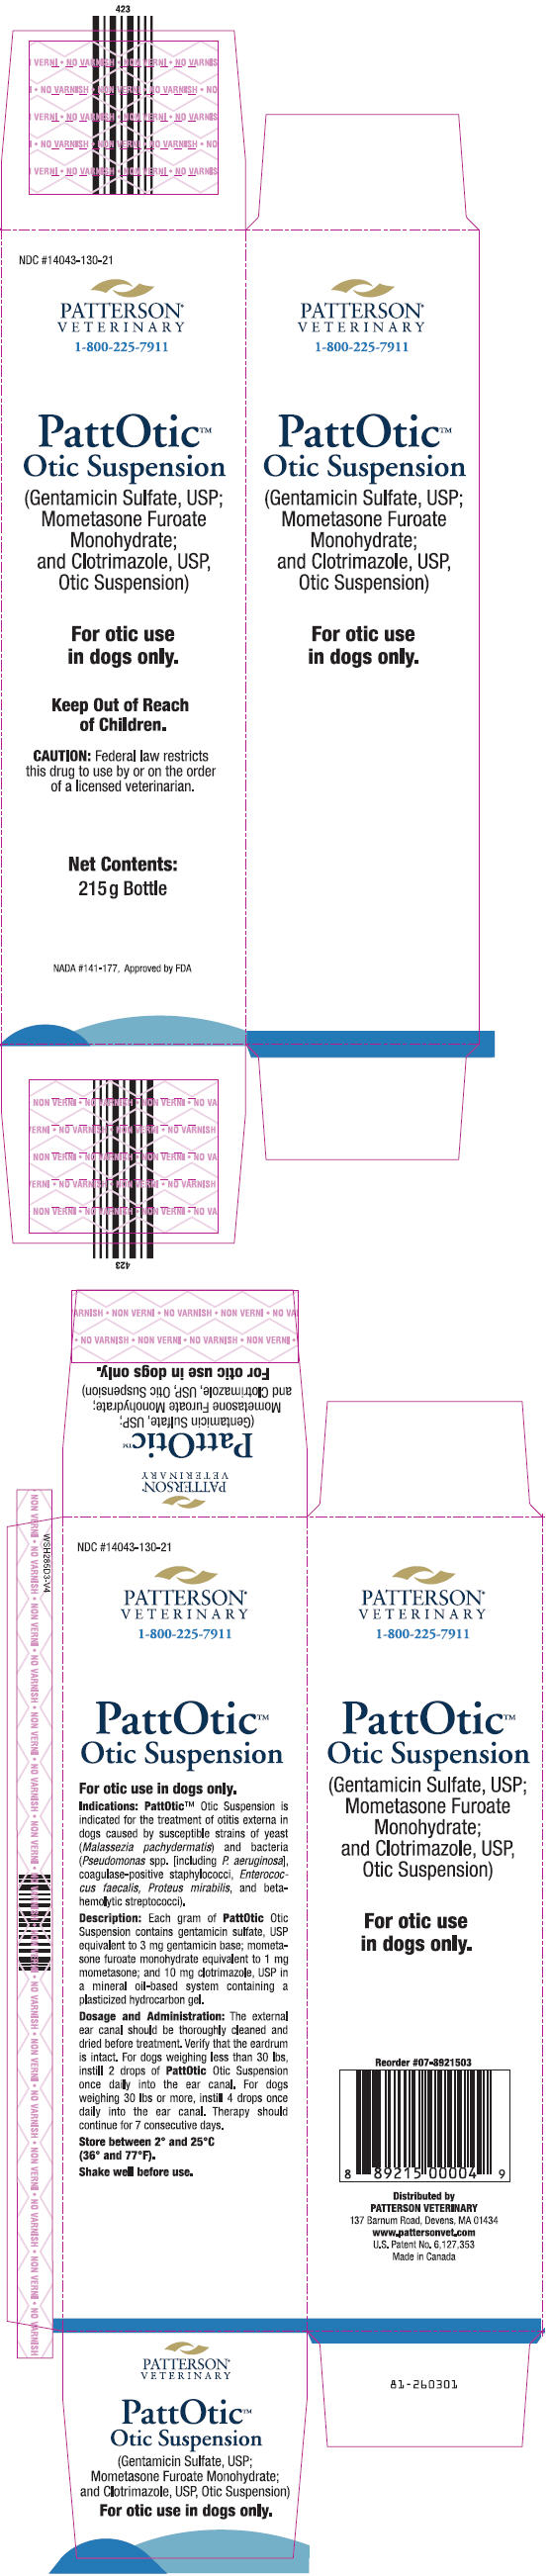 PRINCIPAL DISPLAY PANEL - 215 g Bottle Carton